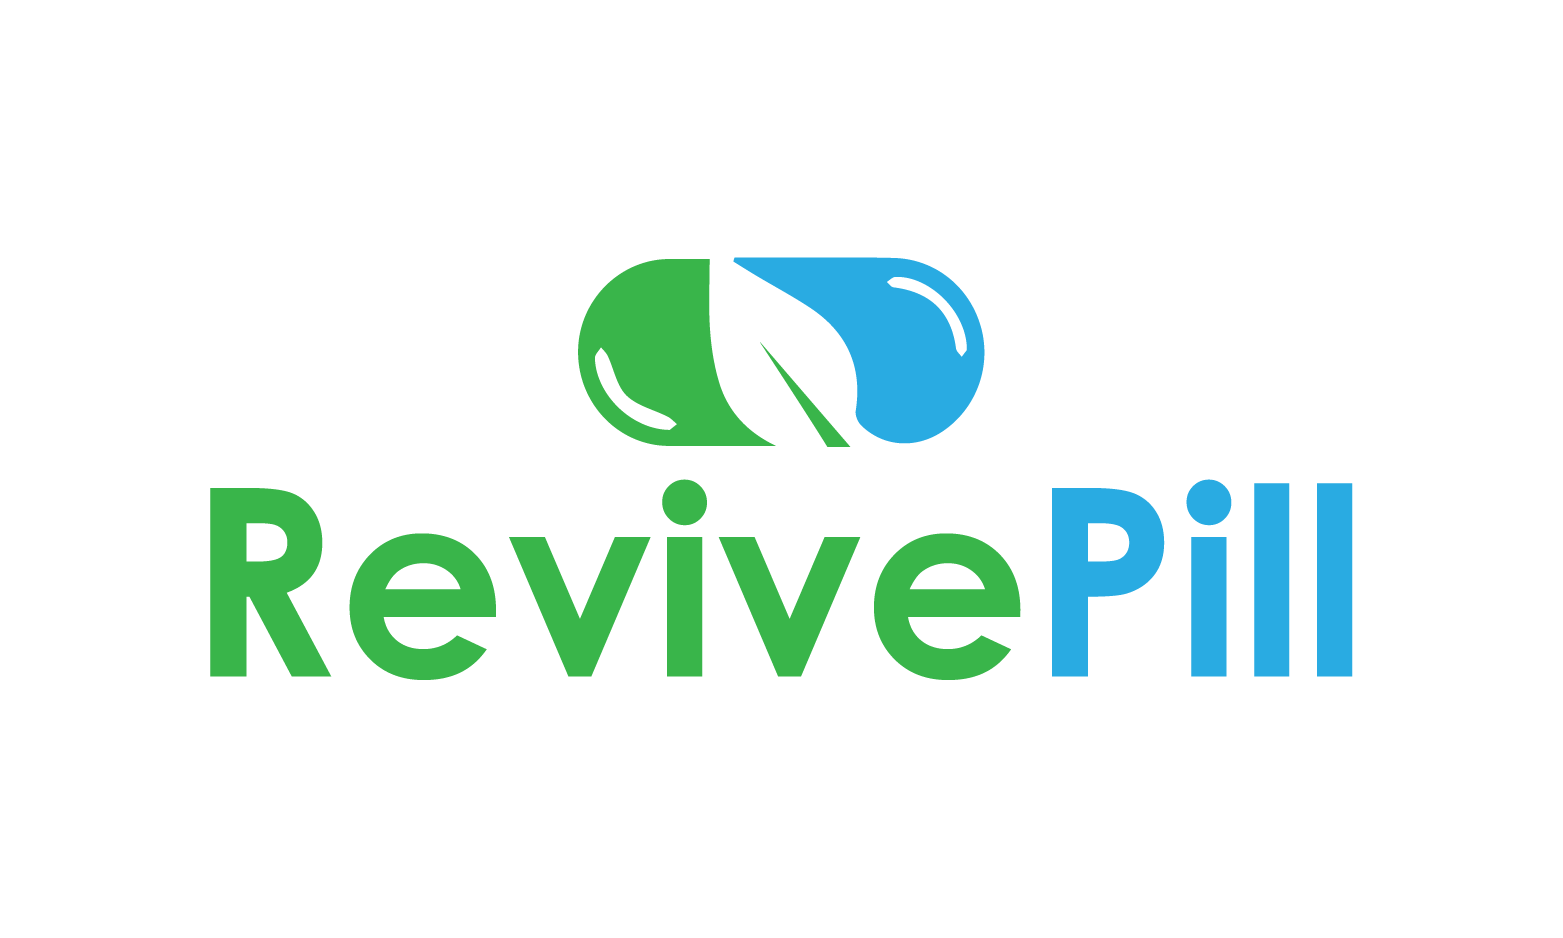 RevivePill.com - Creative brandable domain for sale